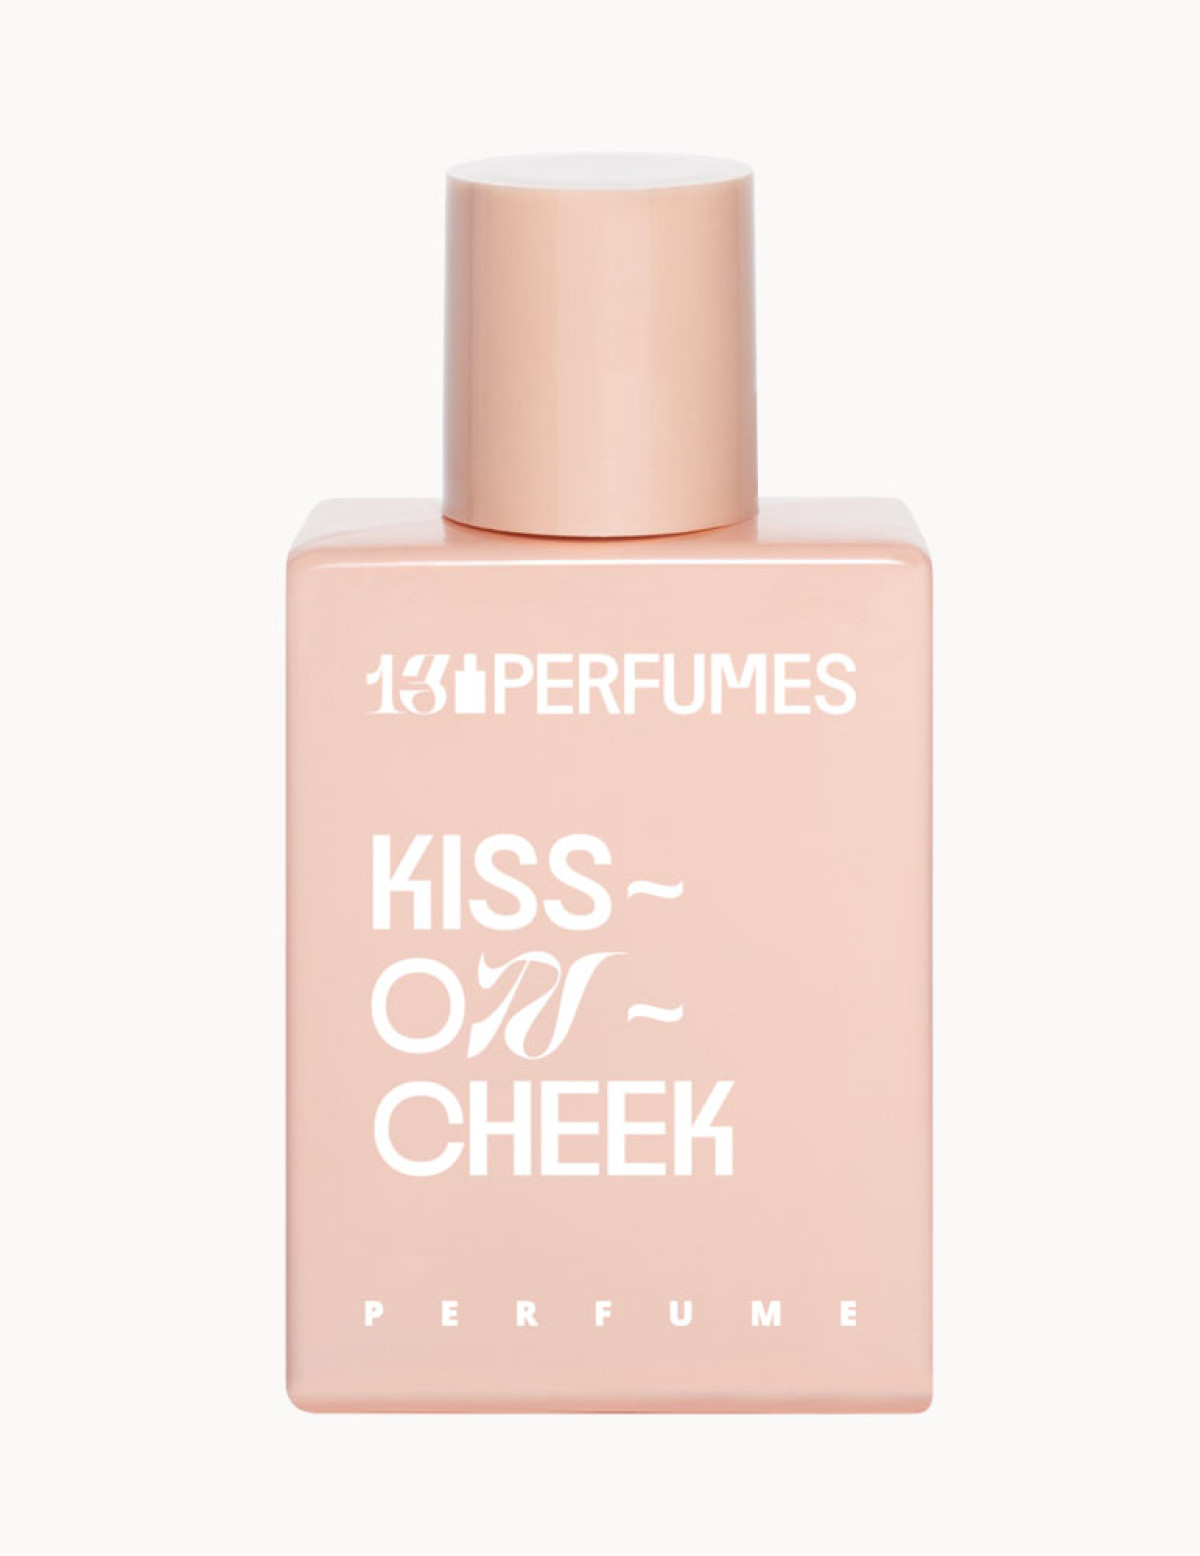 13PERFUMES, Kiss-On-Cheek